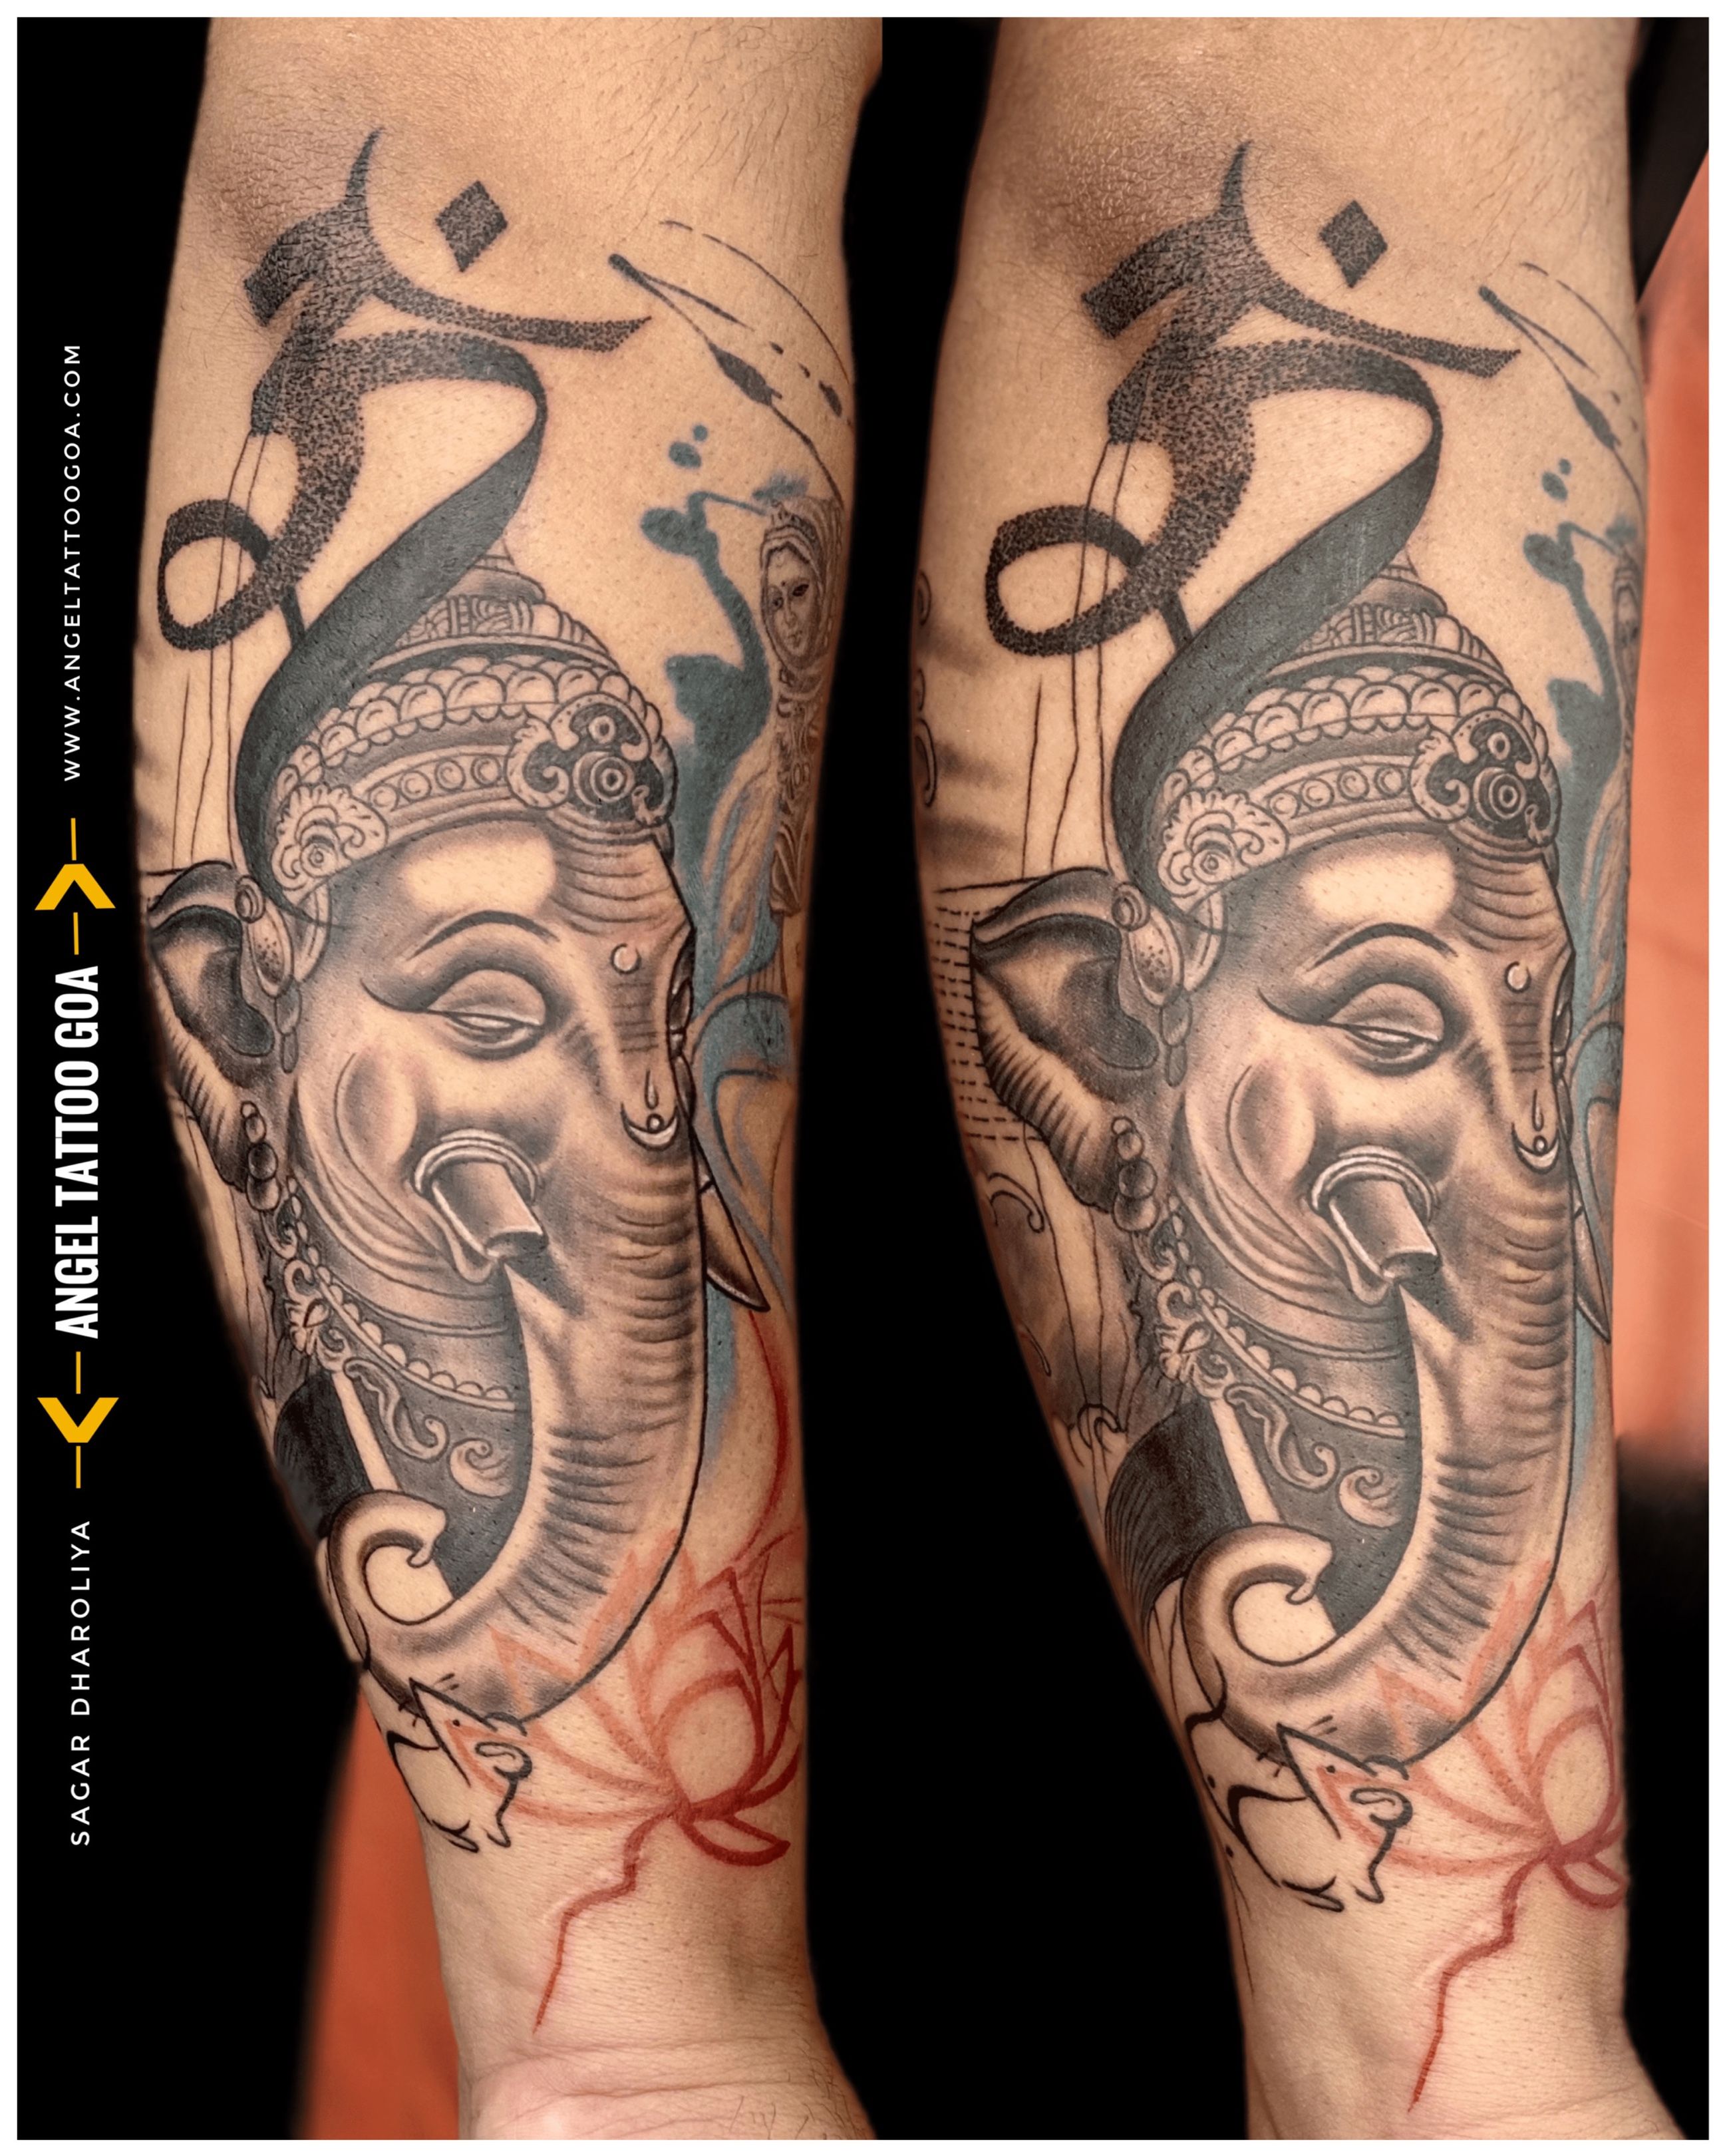 Cassie Piercing's And Tattoo Studio's in Arambol,Goa - Best Tattoo Parlours  in Goa - Justdial